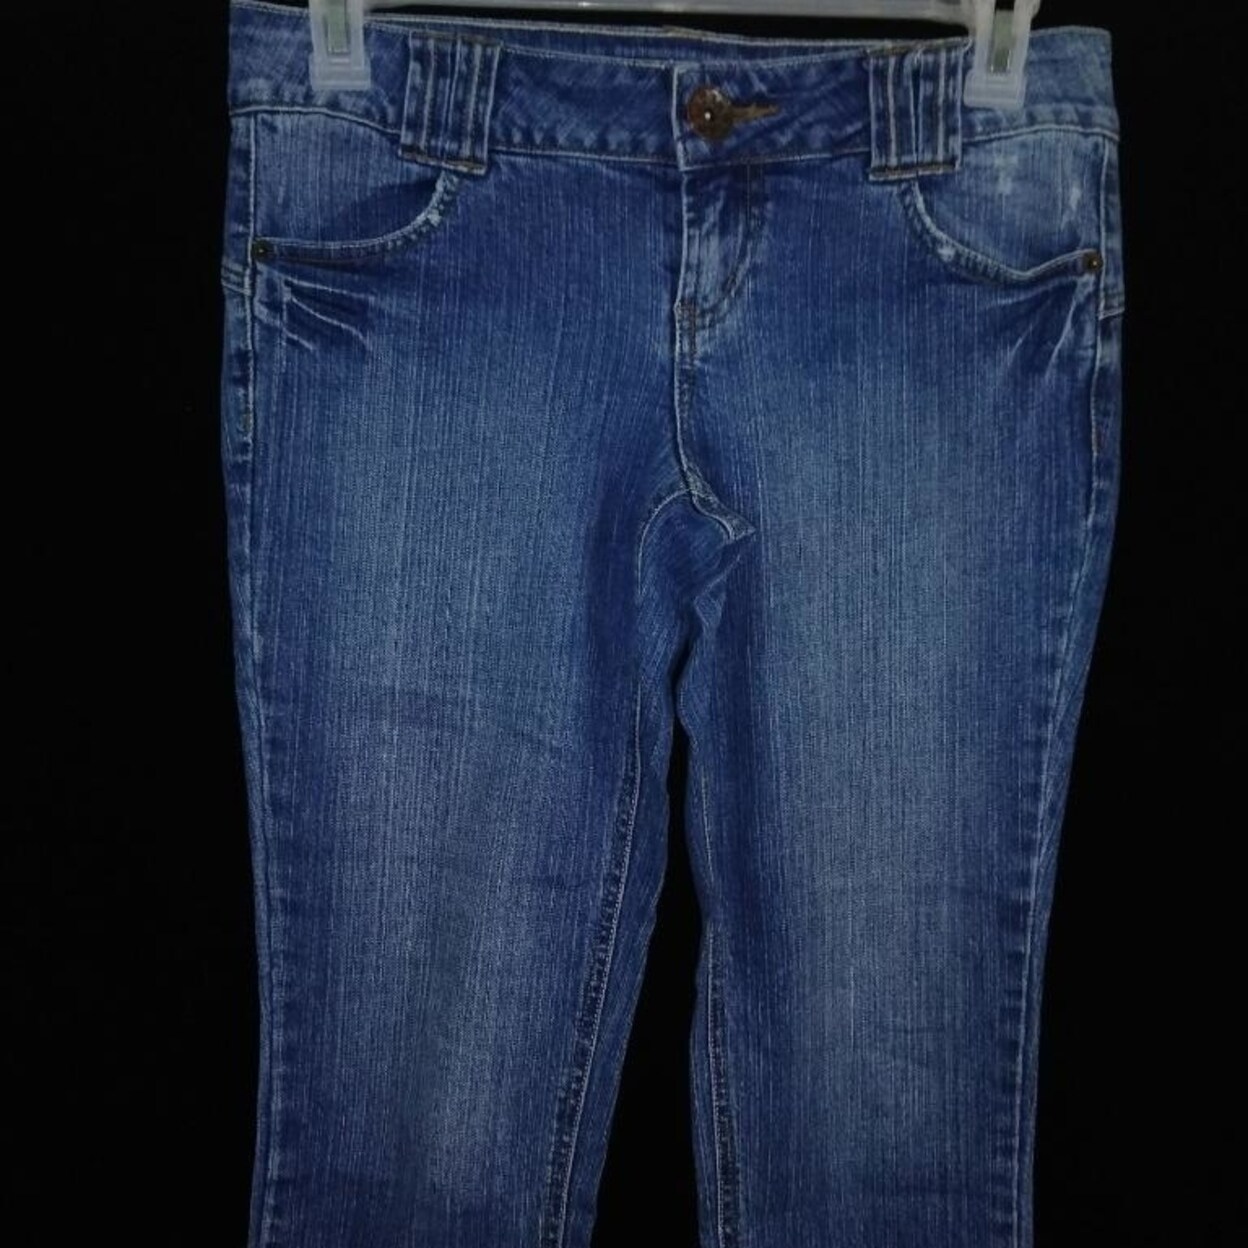 lei ashley jeans